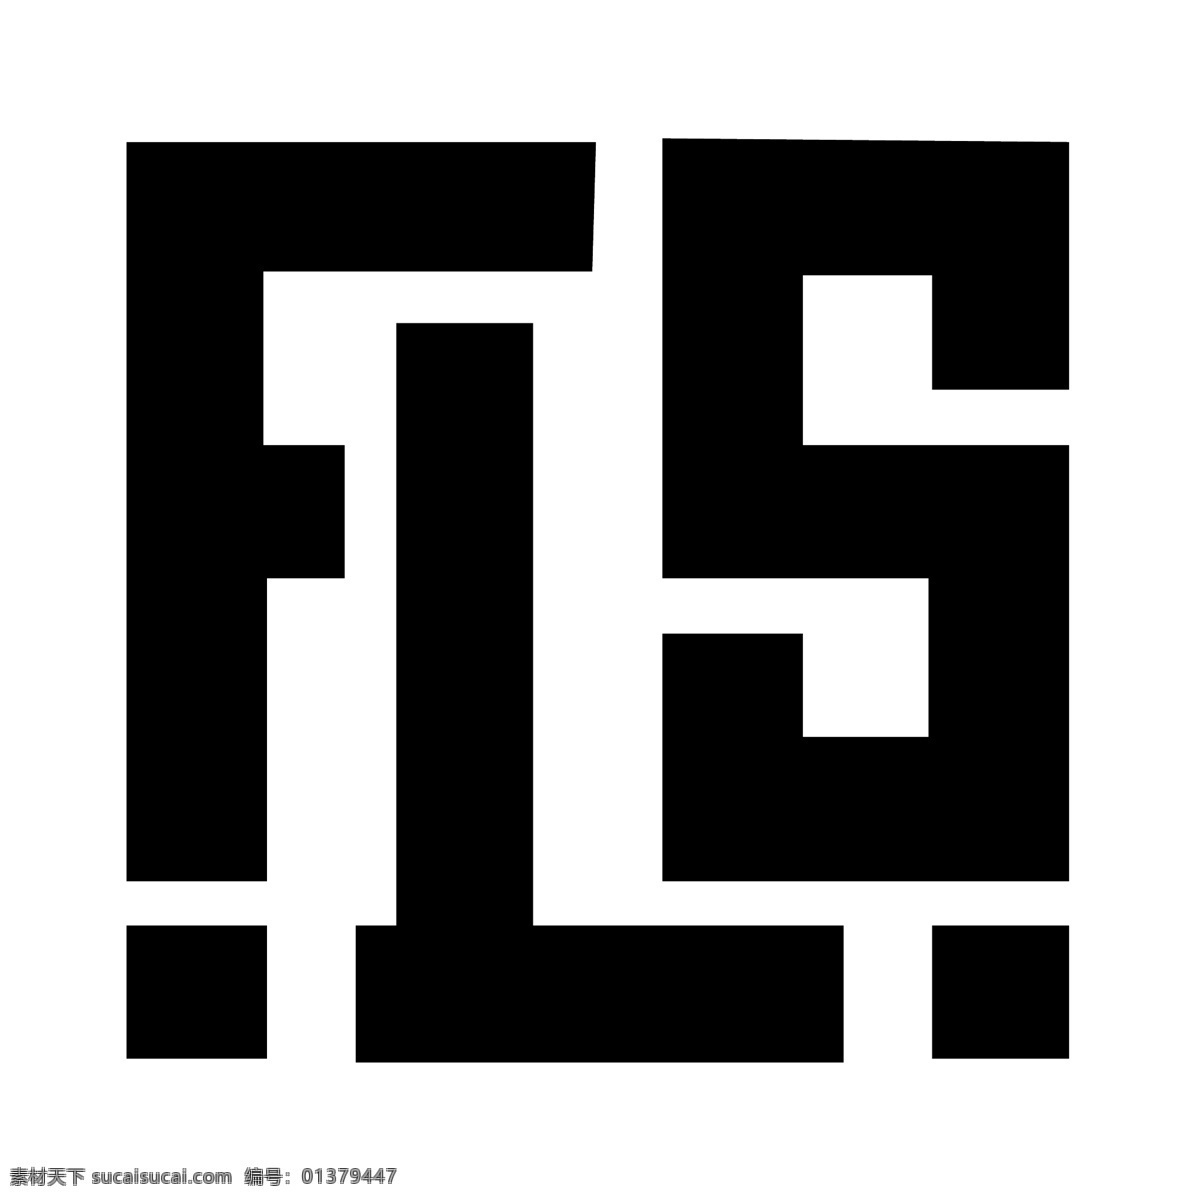 l史密斯 f免费下载 免费 青岛 史密斯 标志 标识 psd源文件 logo设计